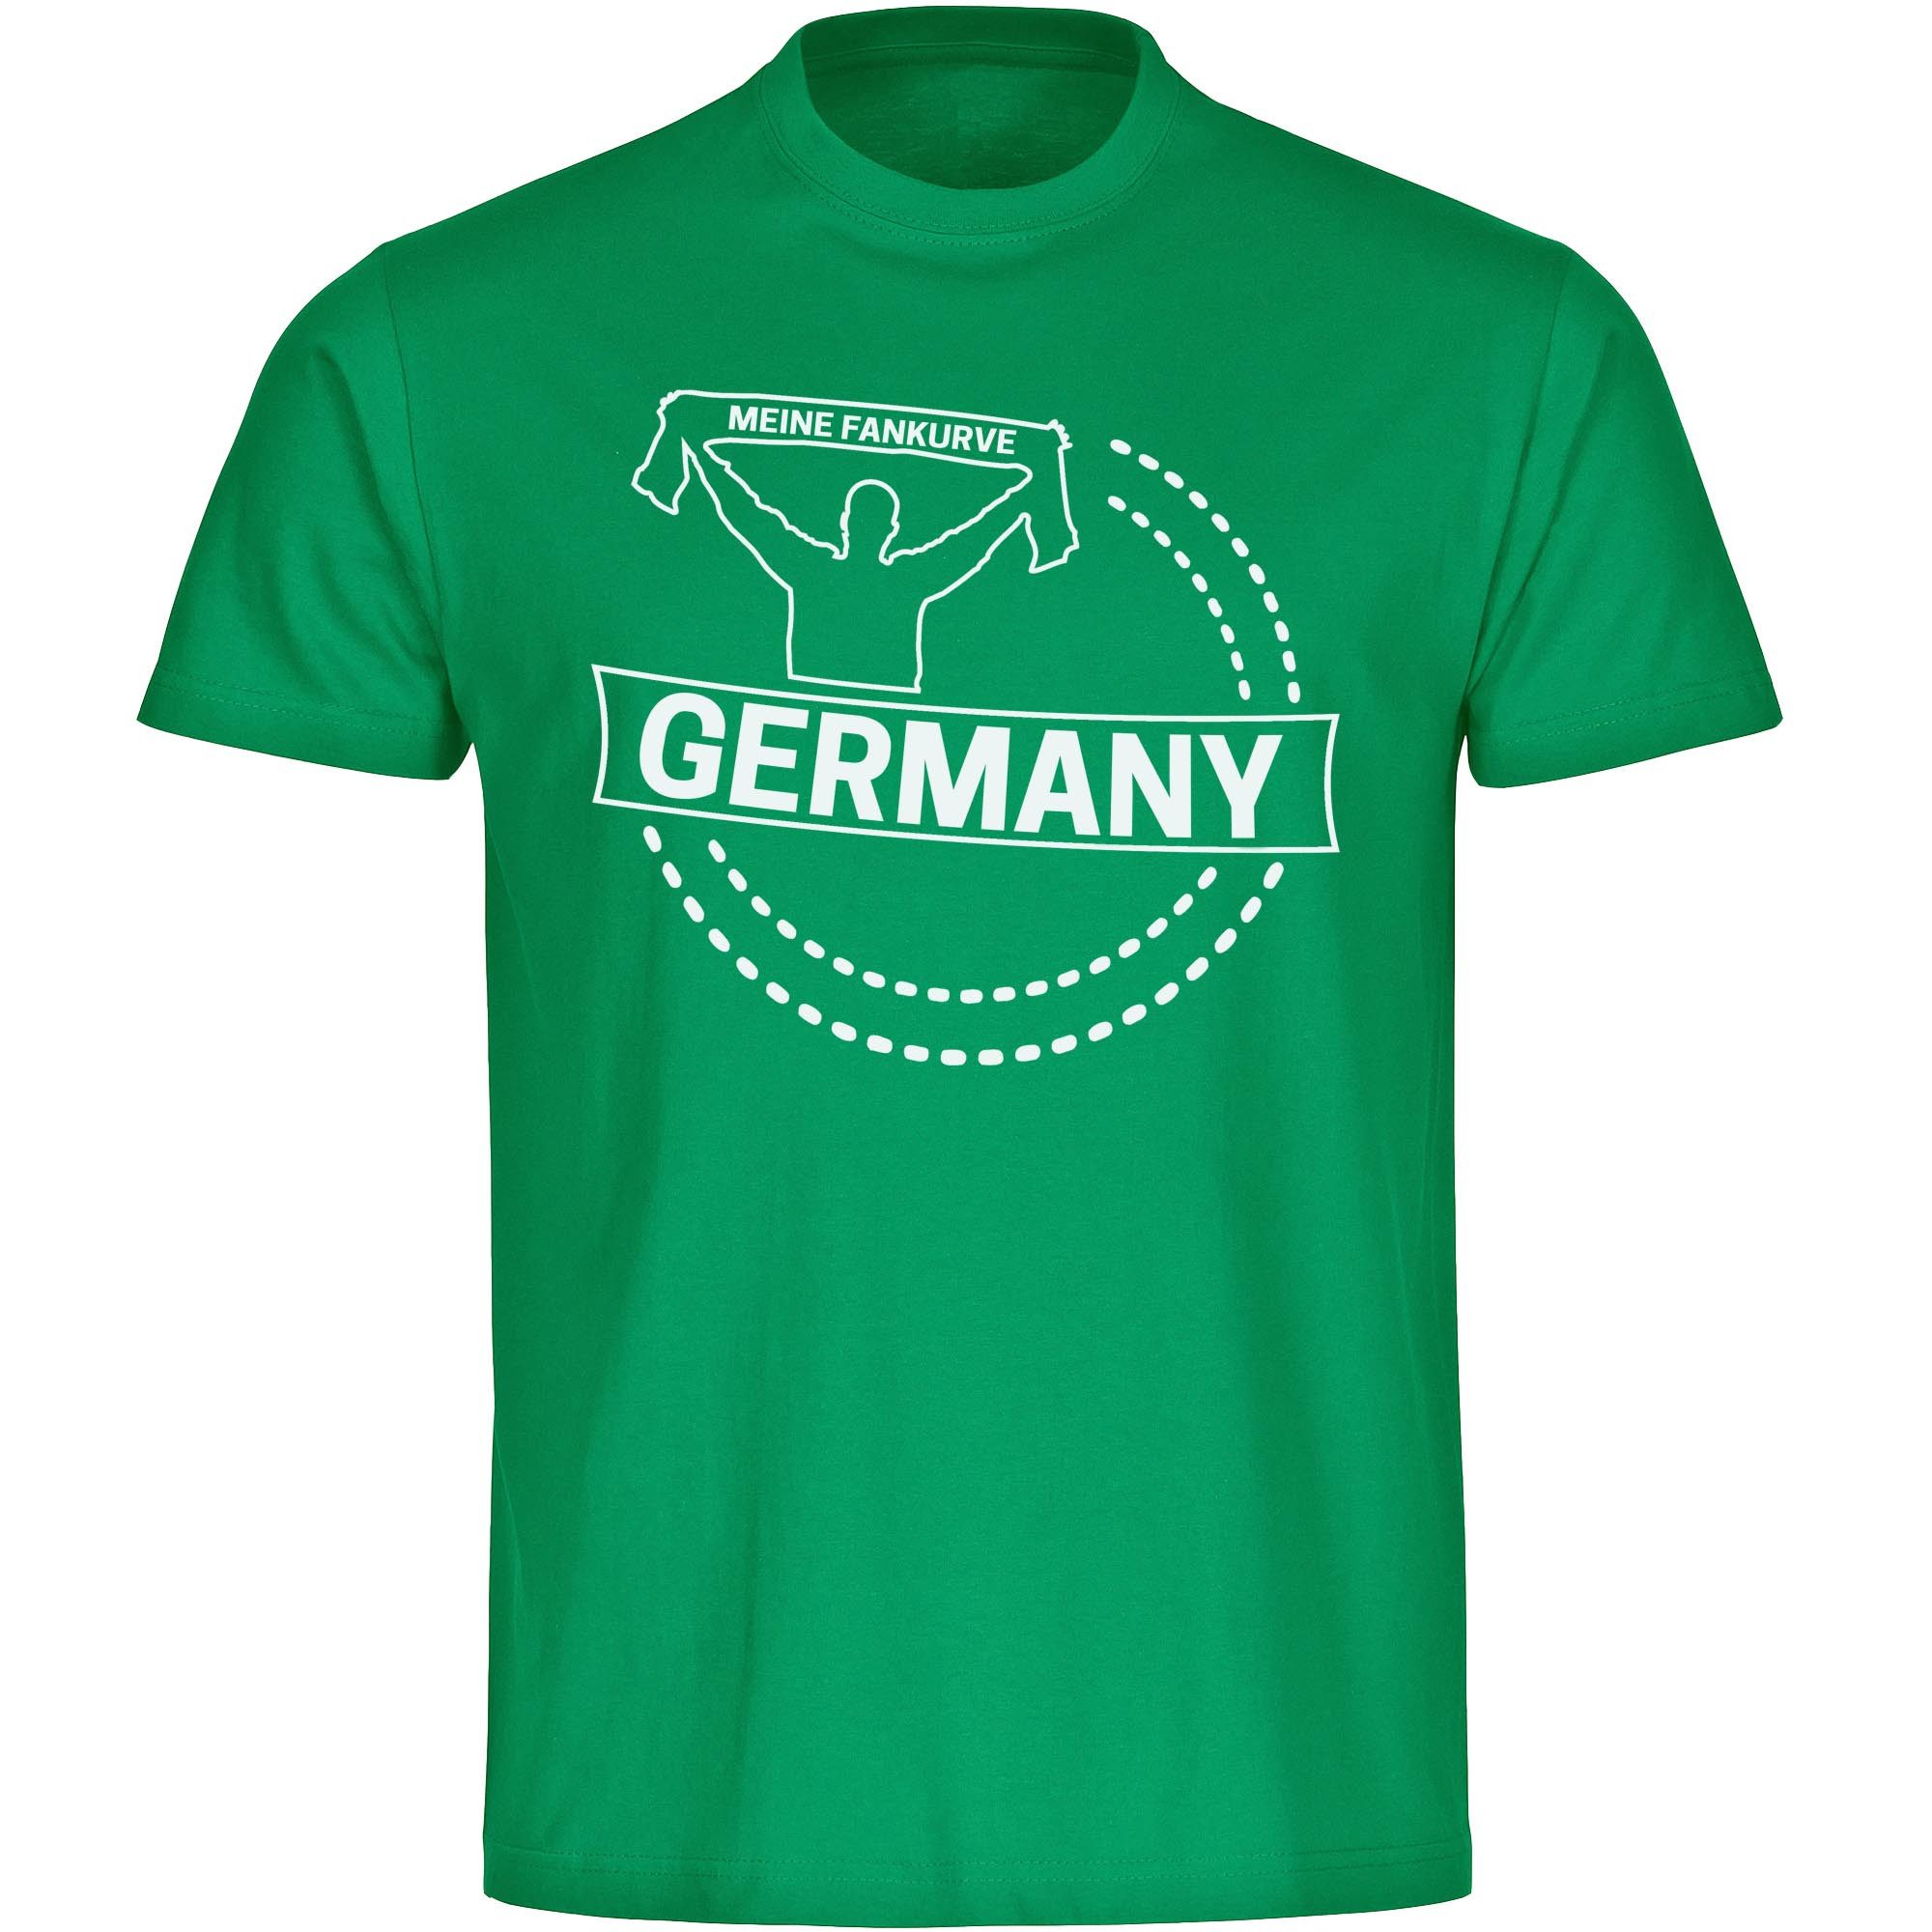 multifanshop T-Shirt Herren Germany - Meine Fankurve - Männer